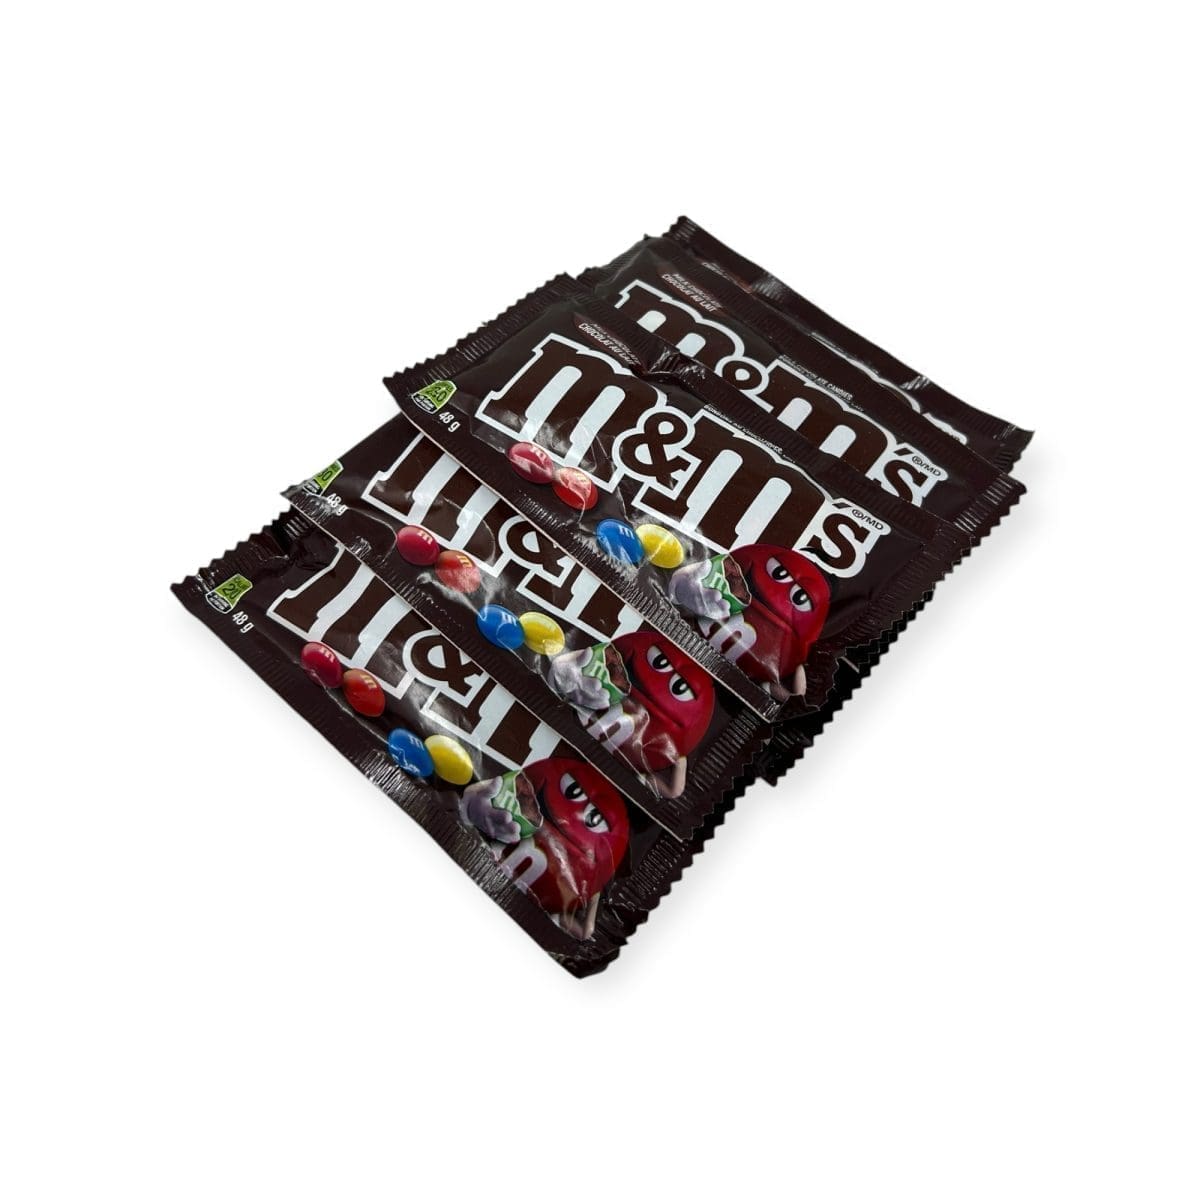 M&m Milk Chocolate (48g)